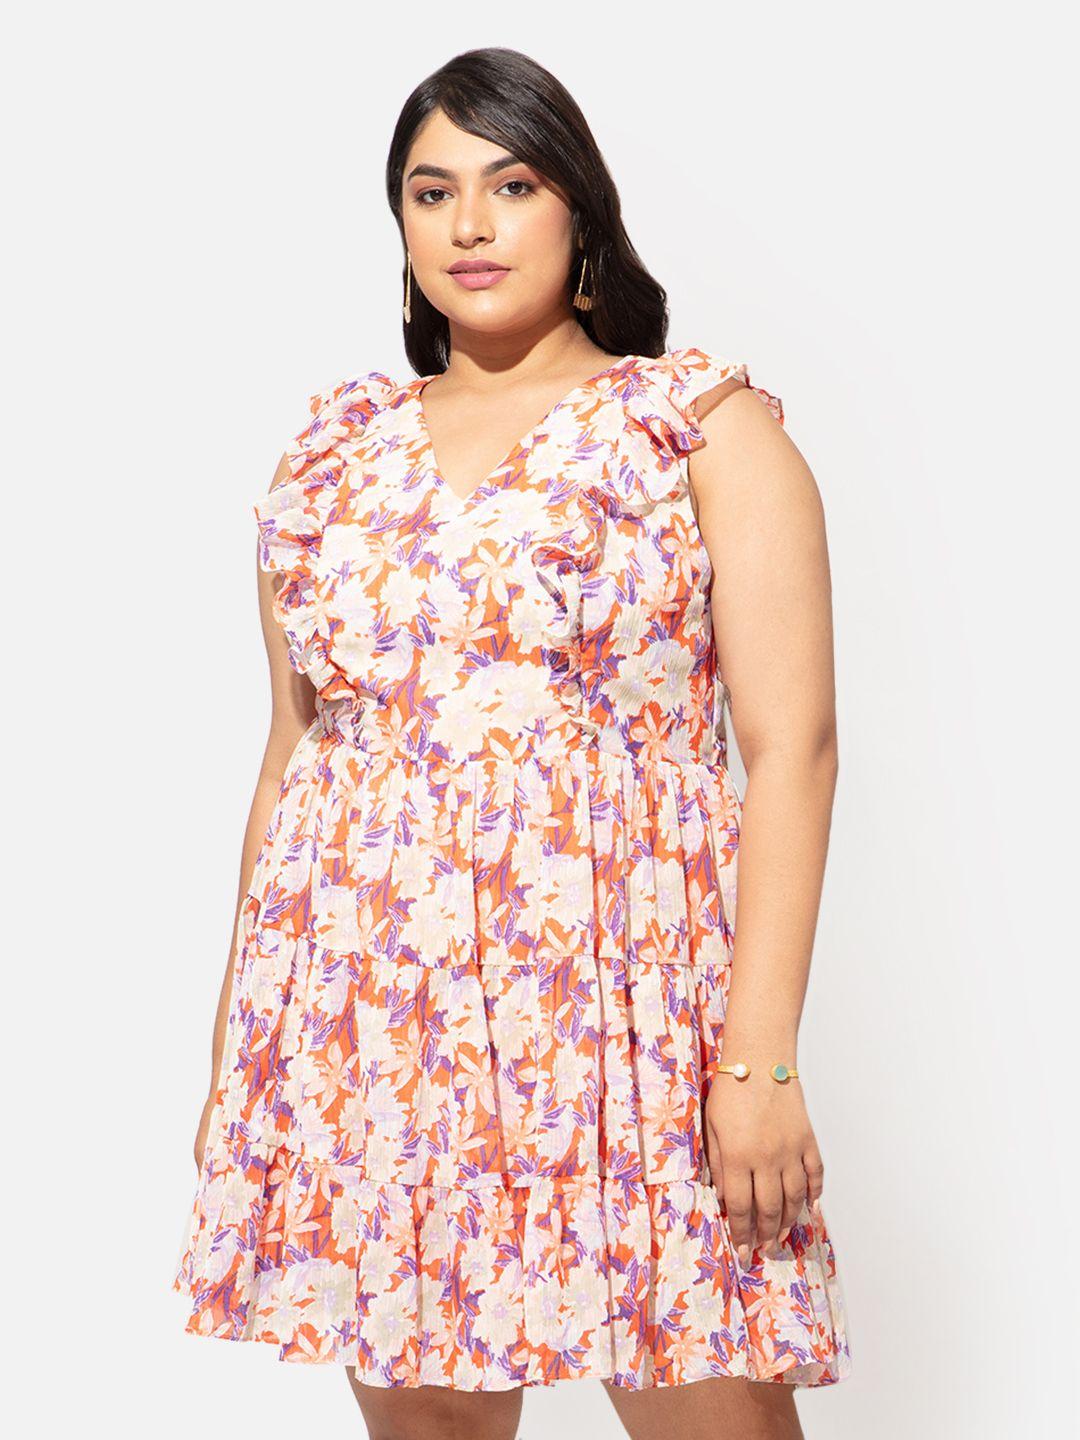 20dresses-peach-coloured-floral-chiffon-dress